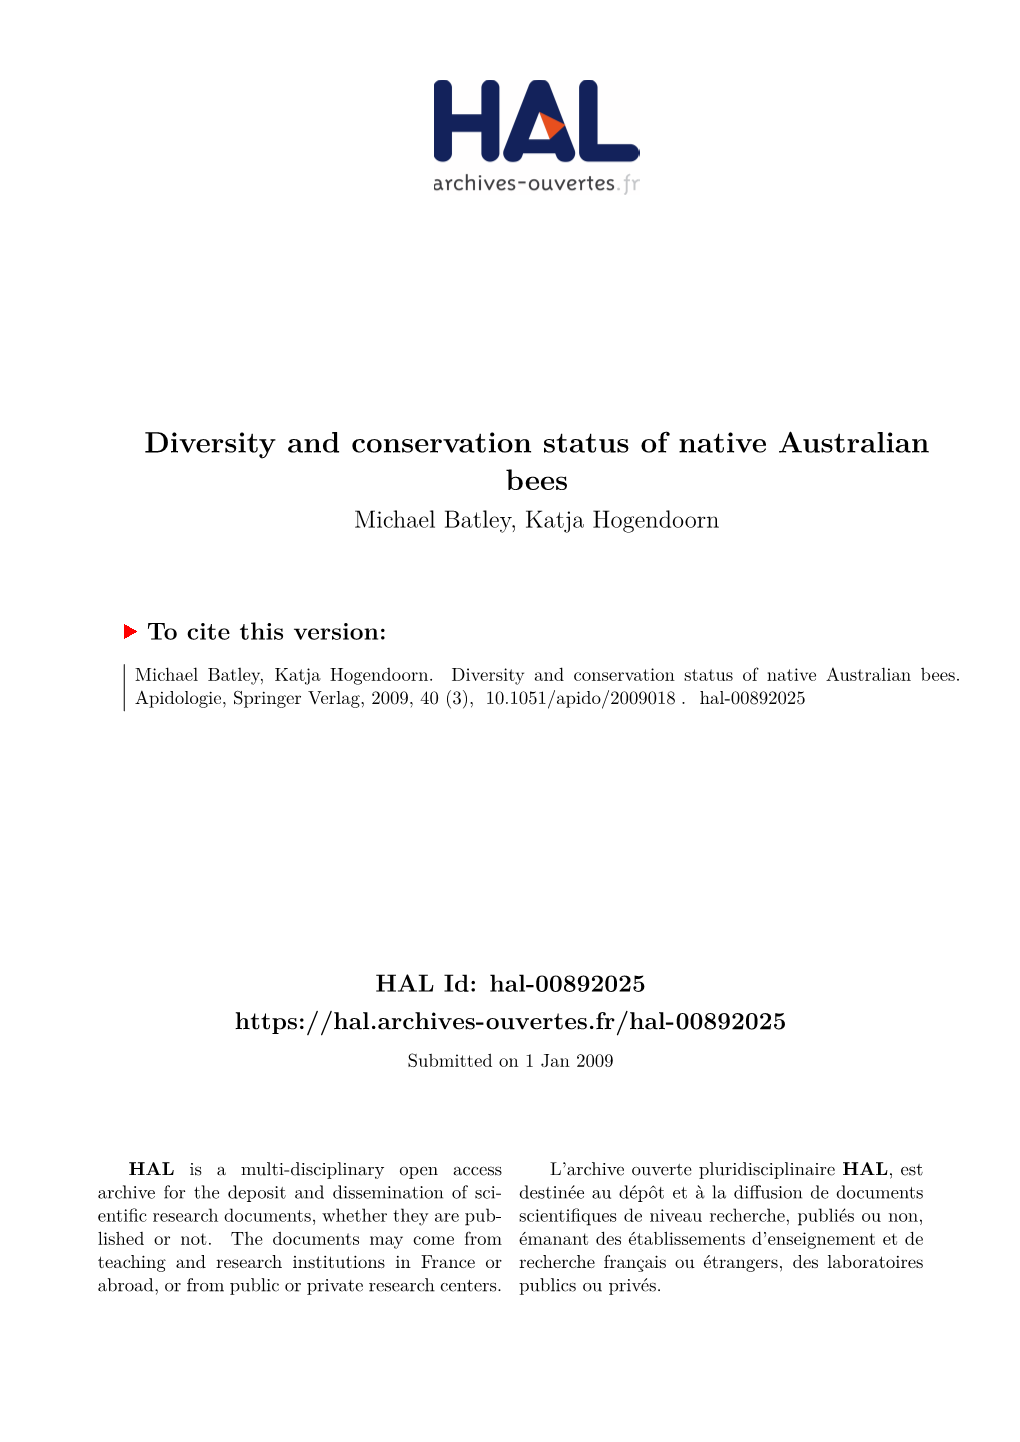 Diversity and Conservation Status of Native Australian Bees Michael Batley, Katja Hogendoorn